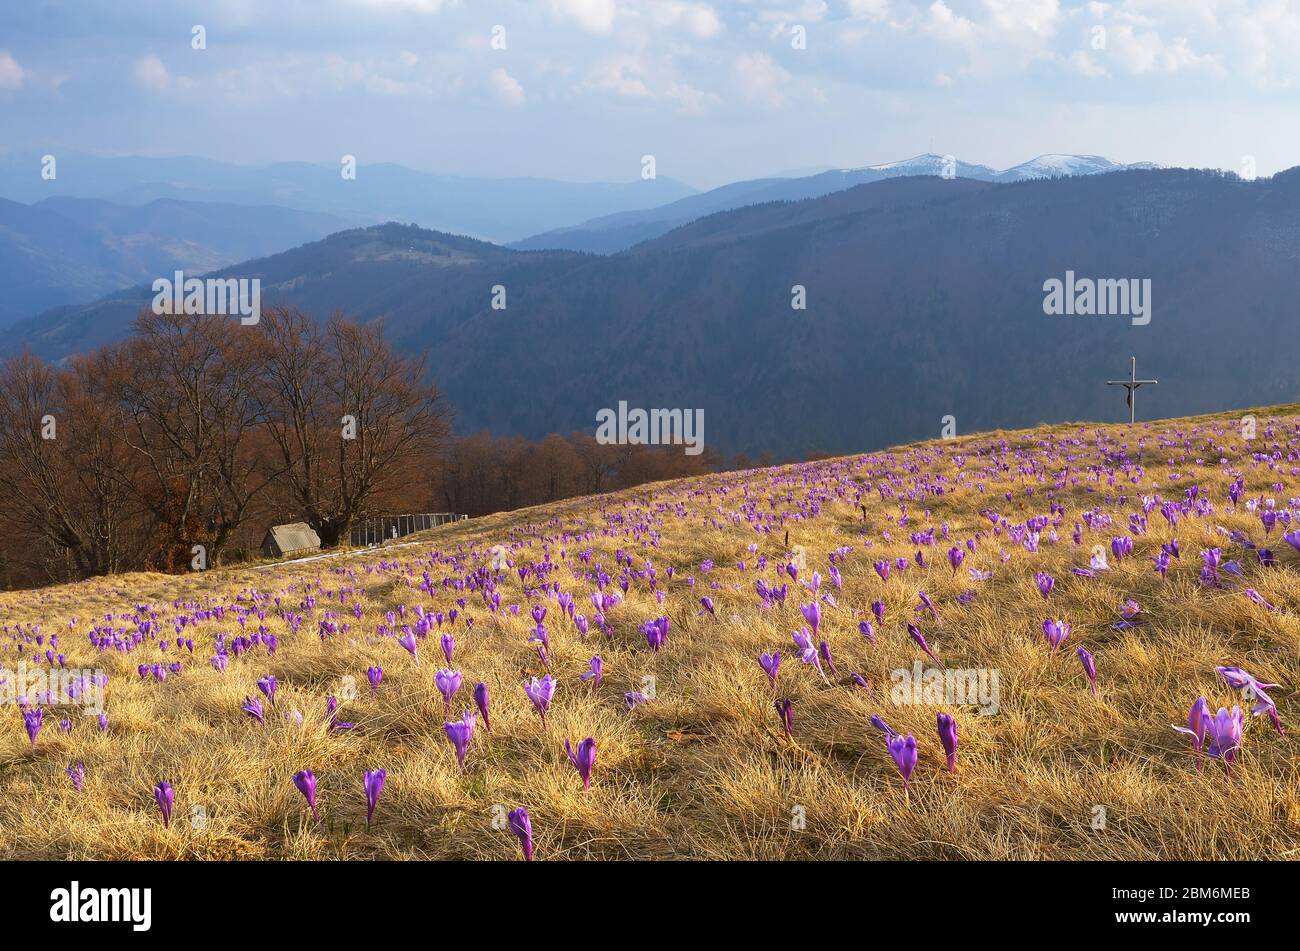 Spring landscape in the mountains. Glade of flowering crocuses. Carpathians, Ukraine, Europe Stock Photo